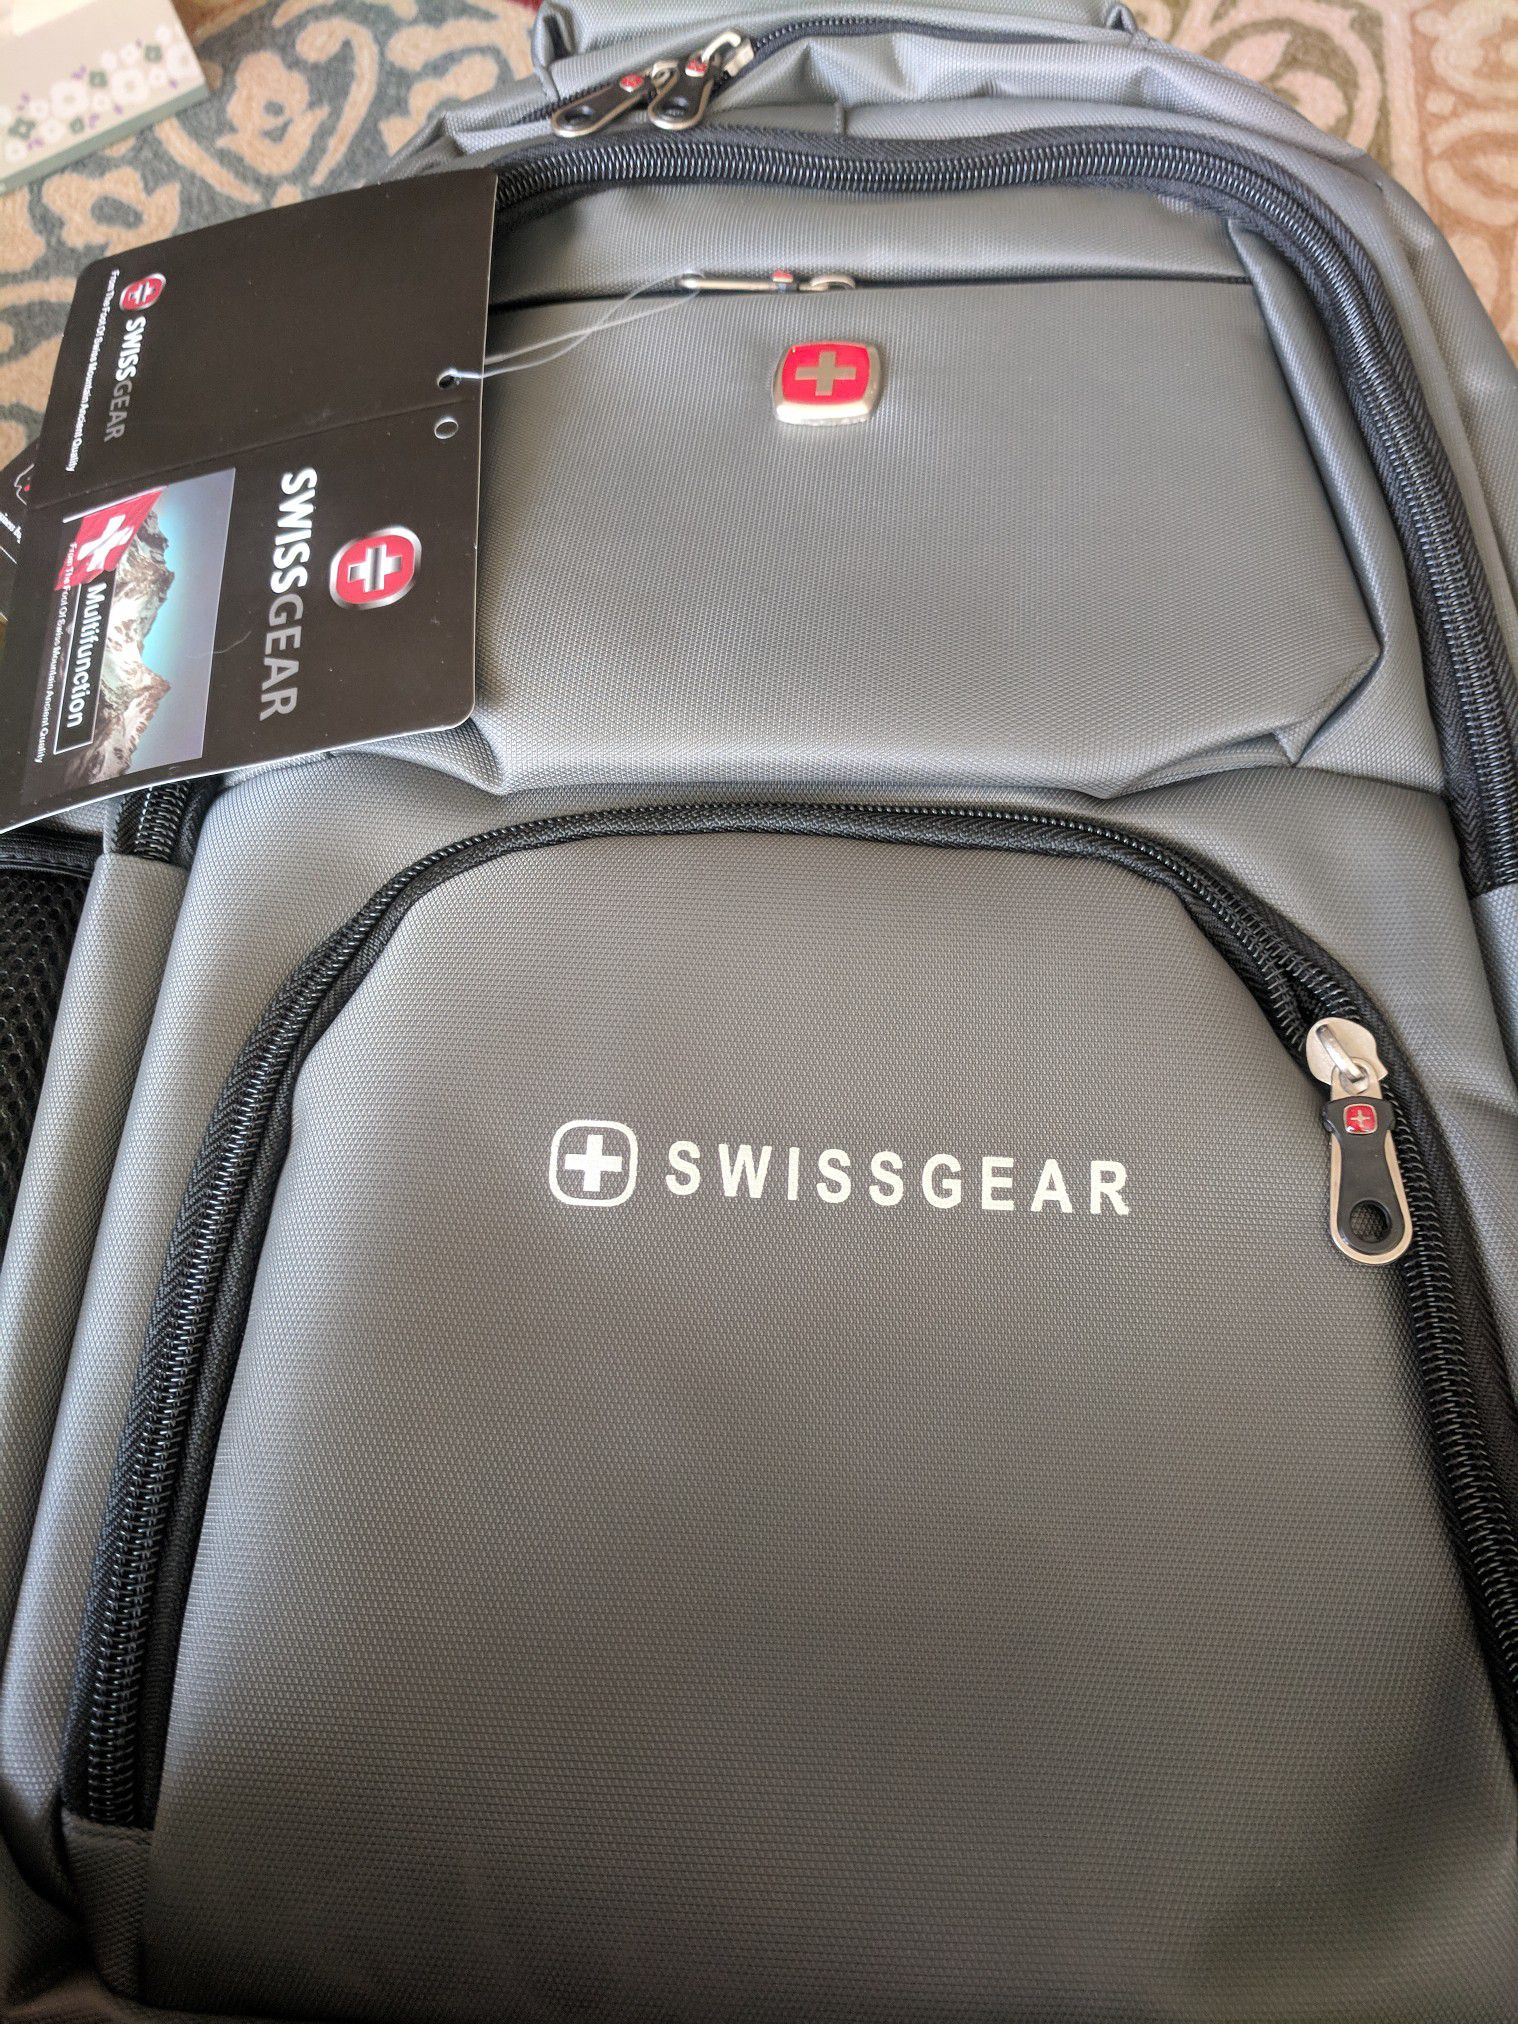 Brand New Swiss Gear backpack